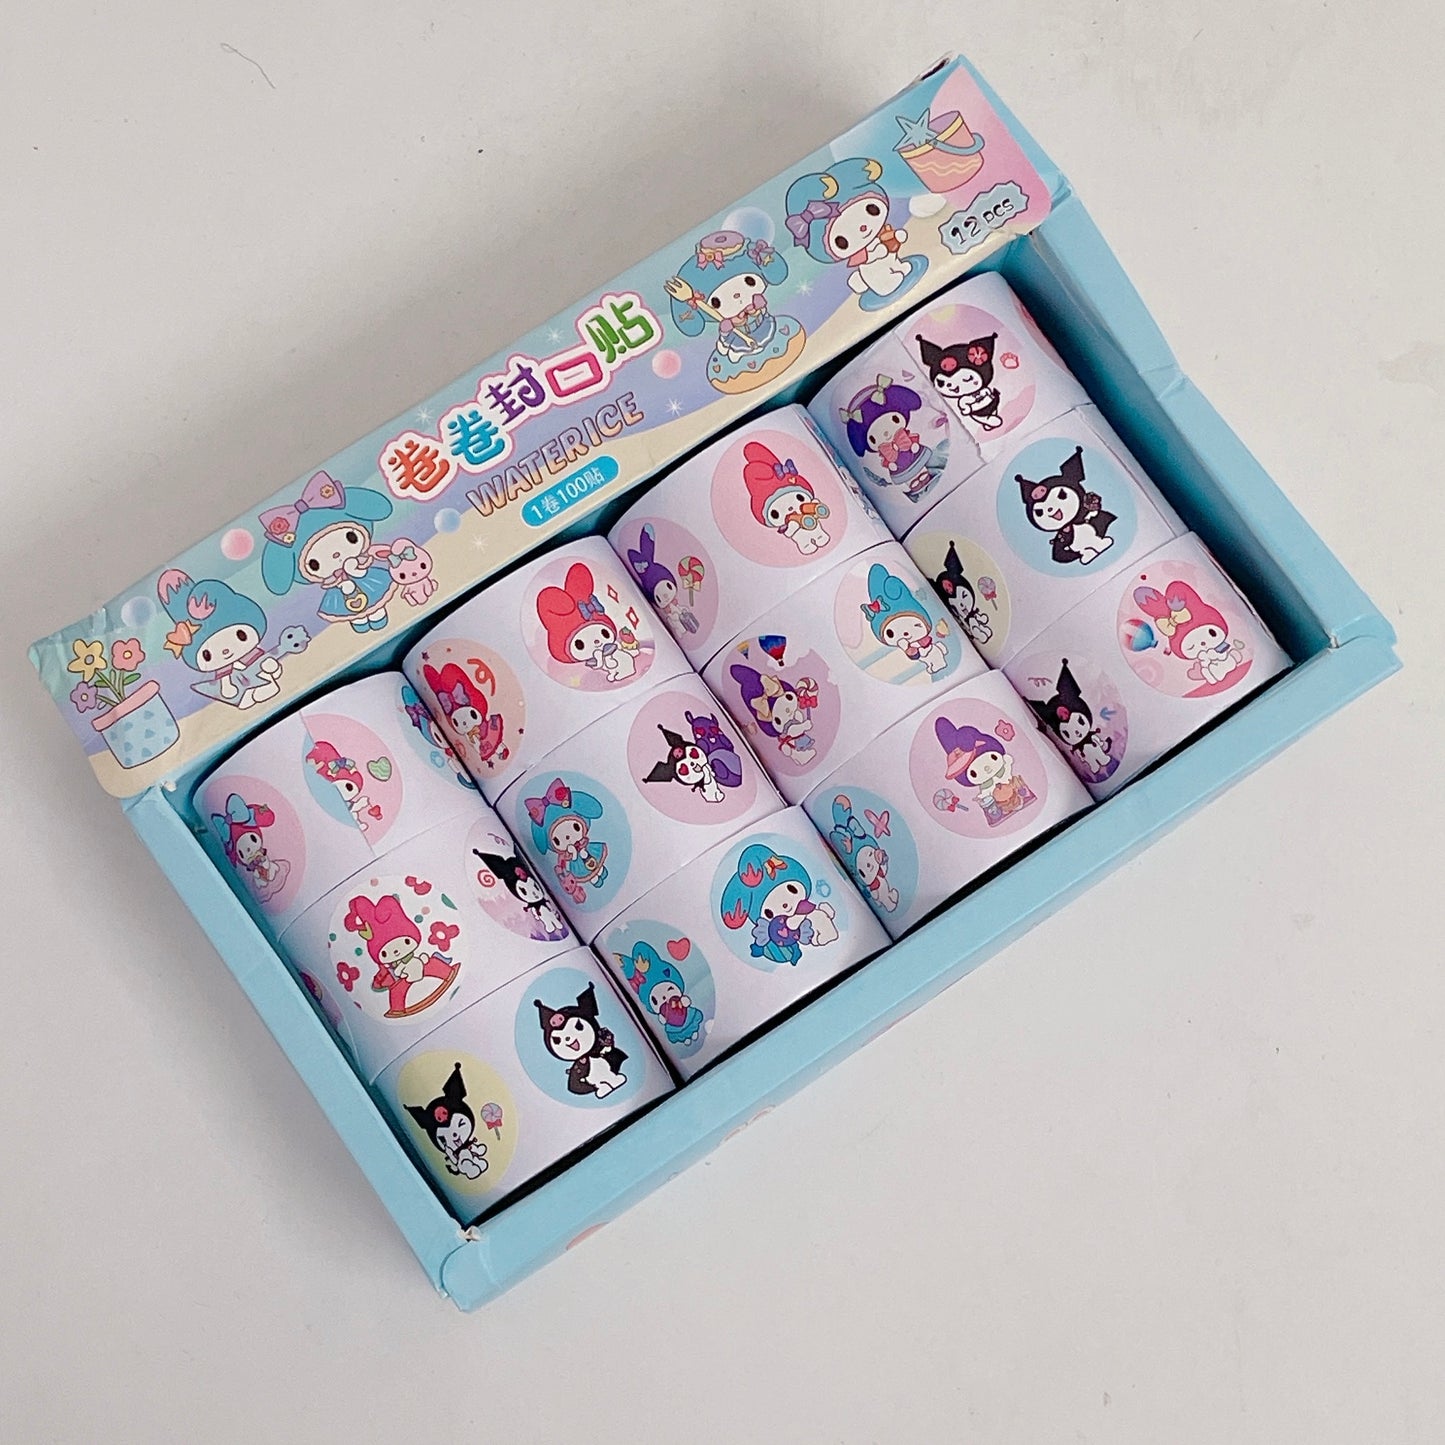 Sanrio 100 pcs sticker rolls set of 12